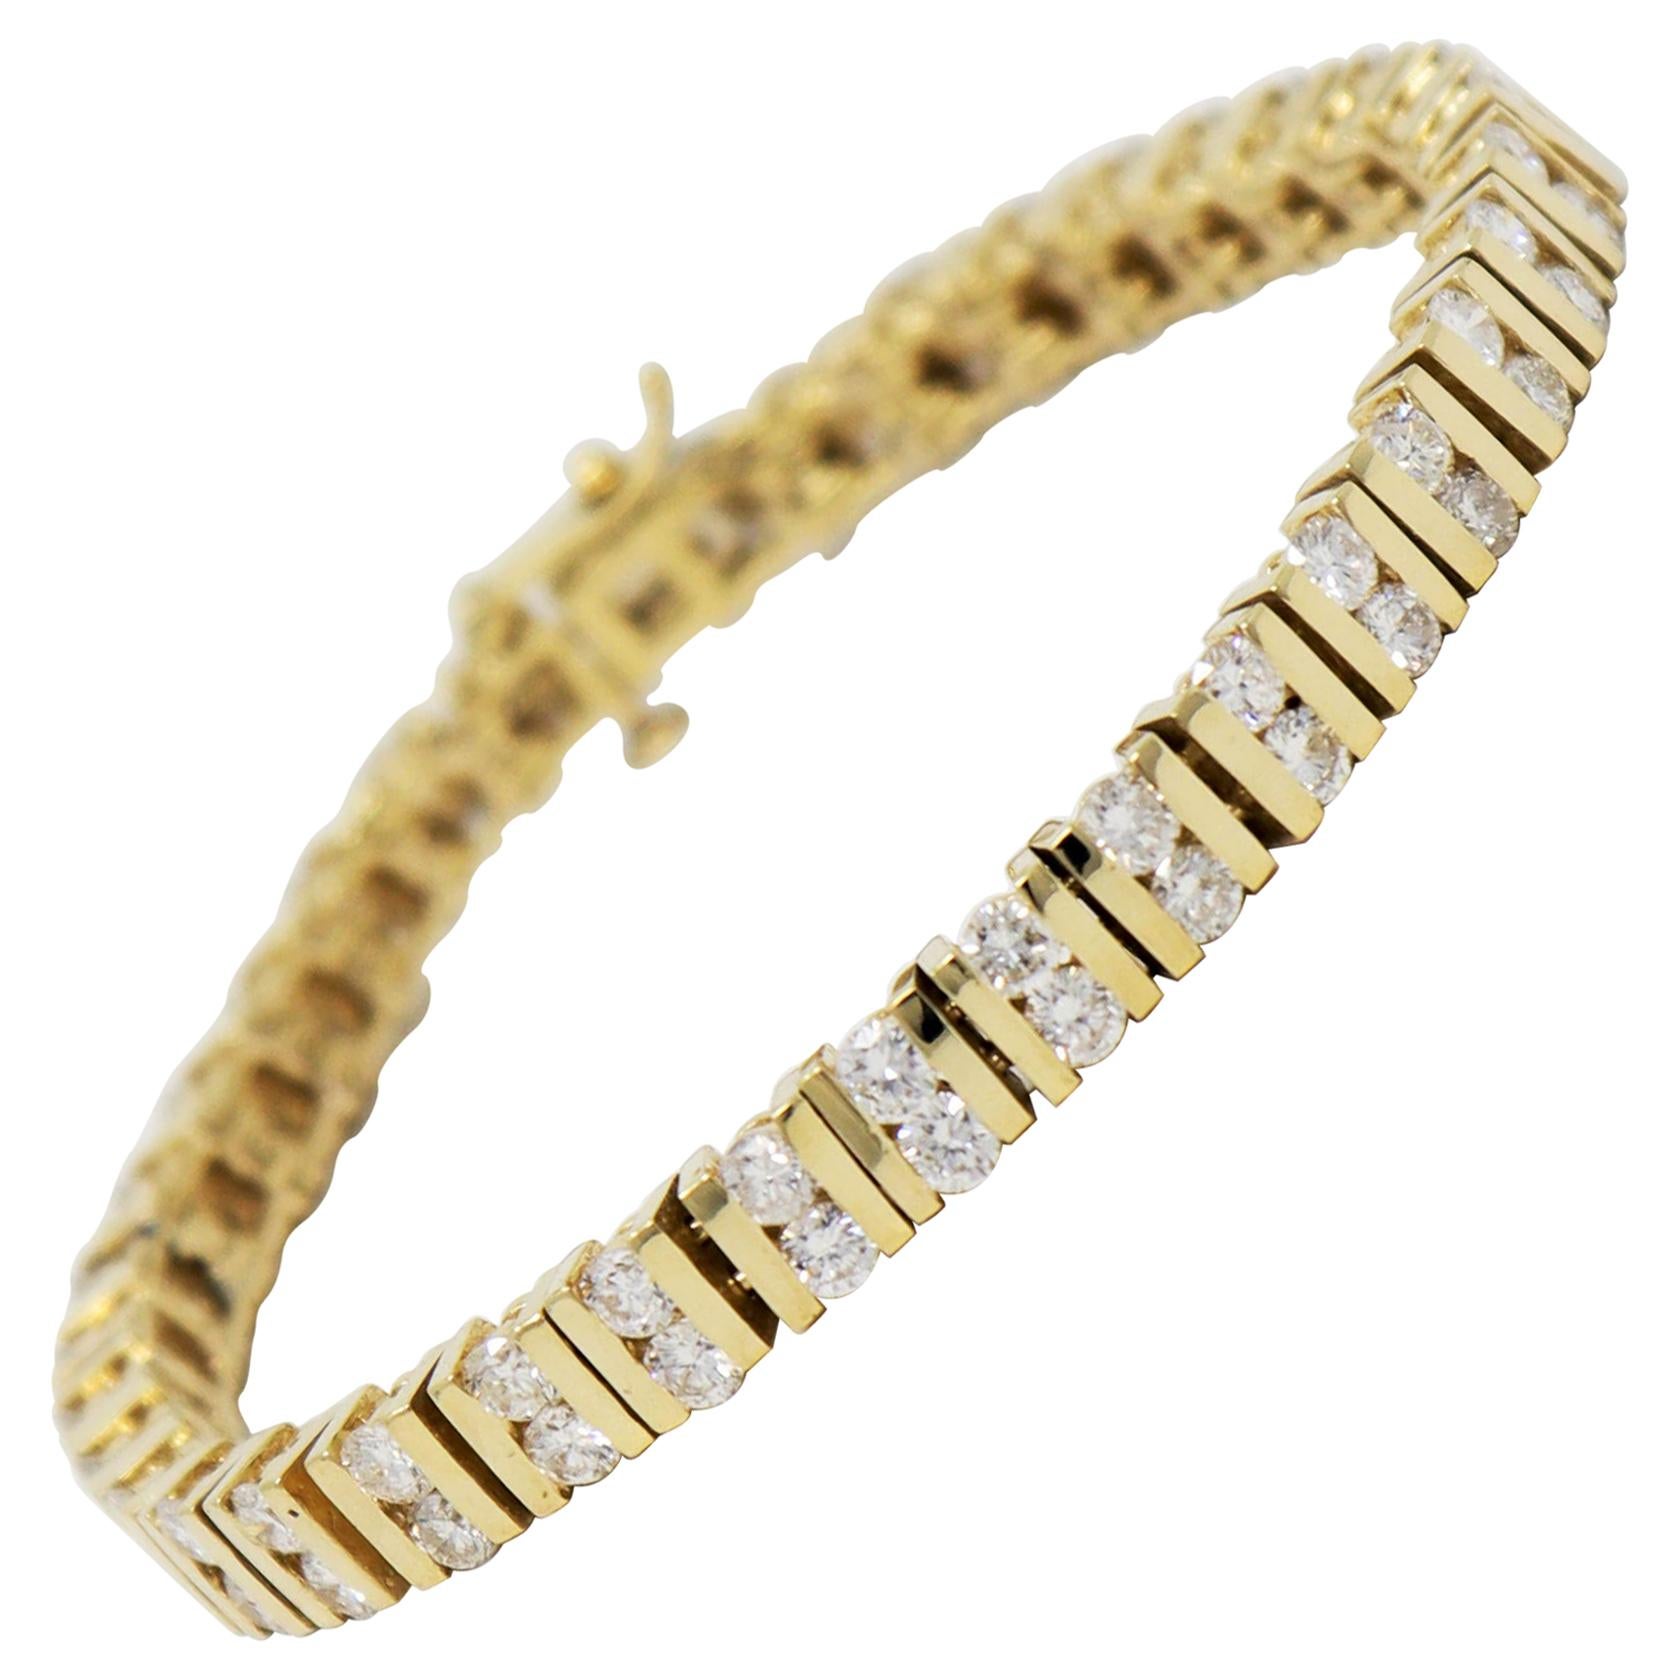 6.35 Carats Total Round Diamond Bar Link Tennis Bracelet in 14 Karat Yellow Gold For Sale